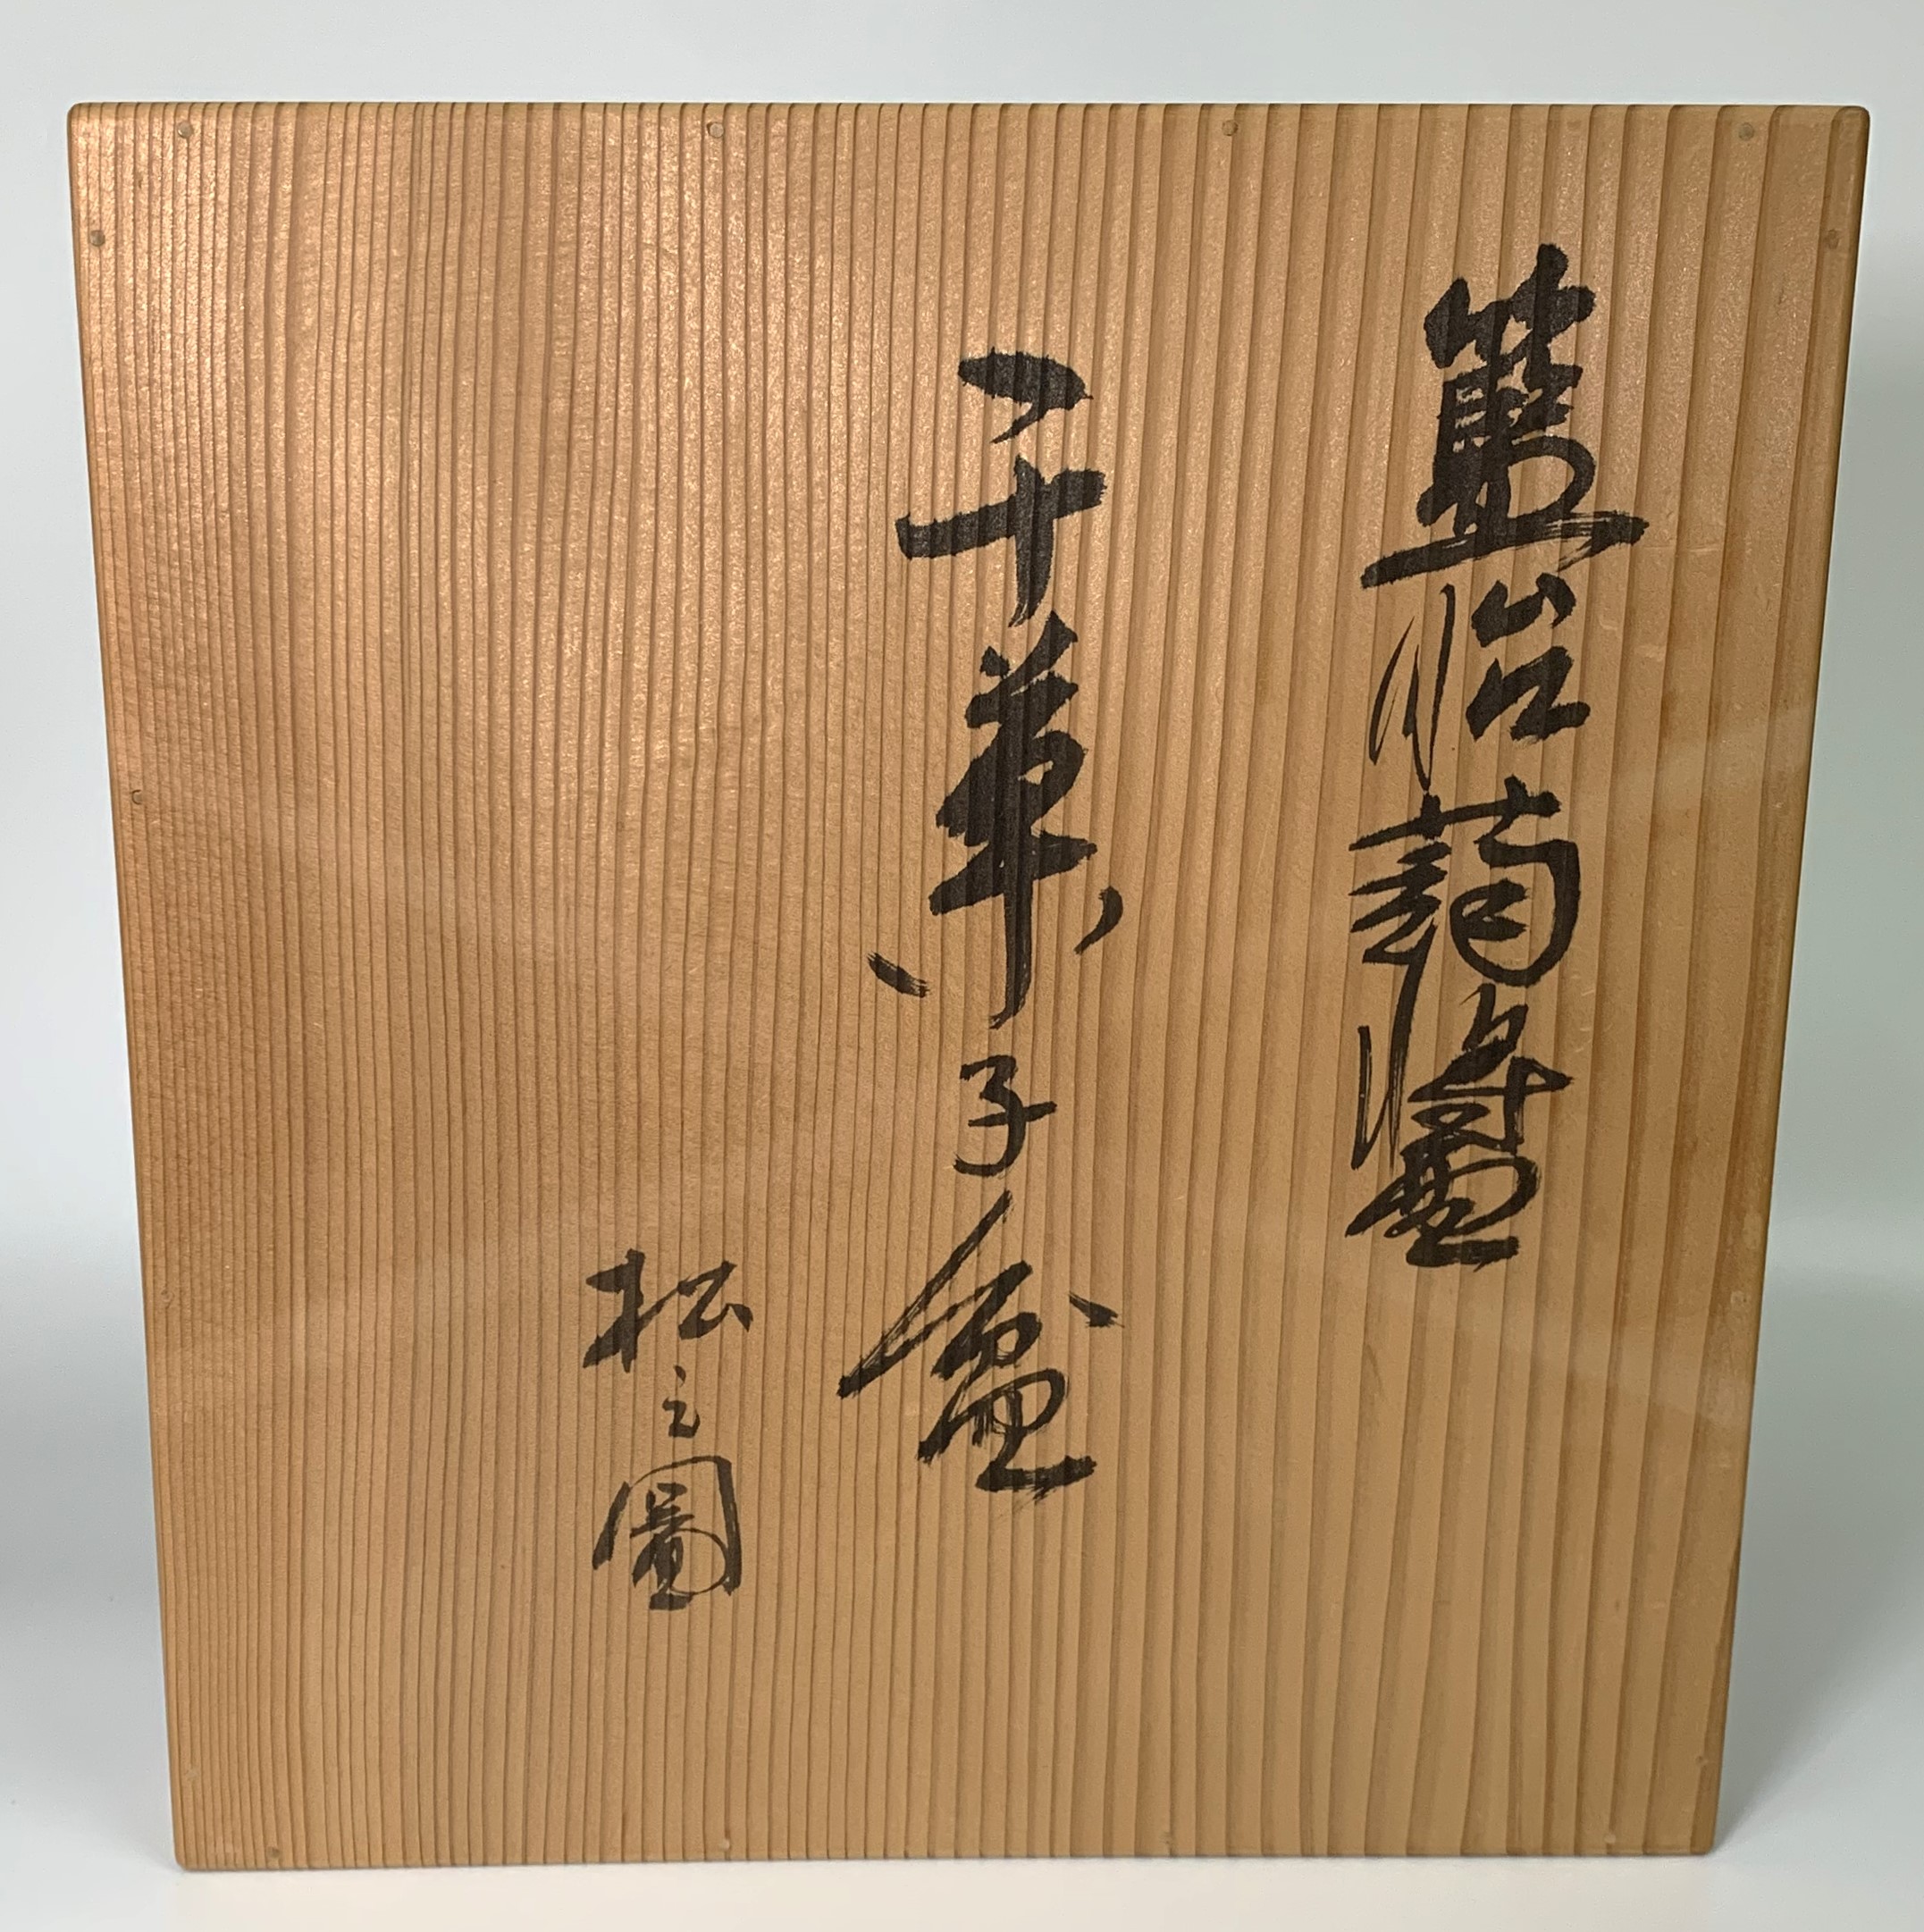 太田儔 籃胎蒟醤干菓子盆 『松之図』 共箱 - ギャラリー黒川 有限会社 